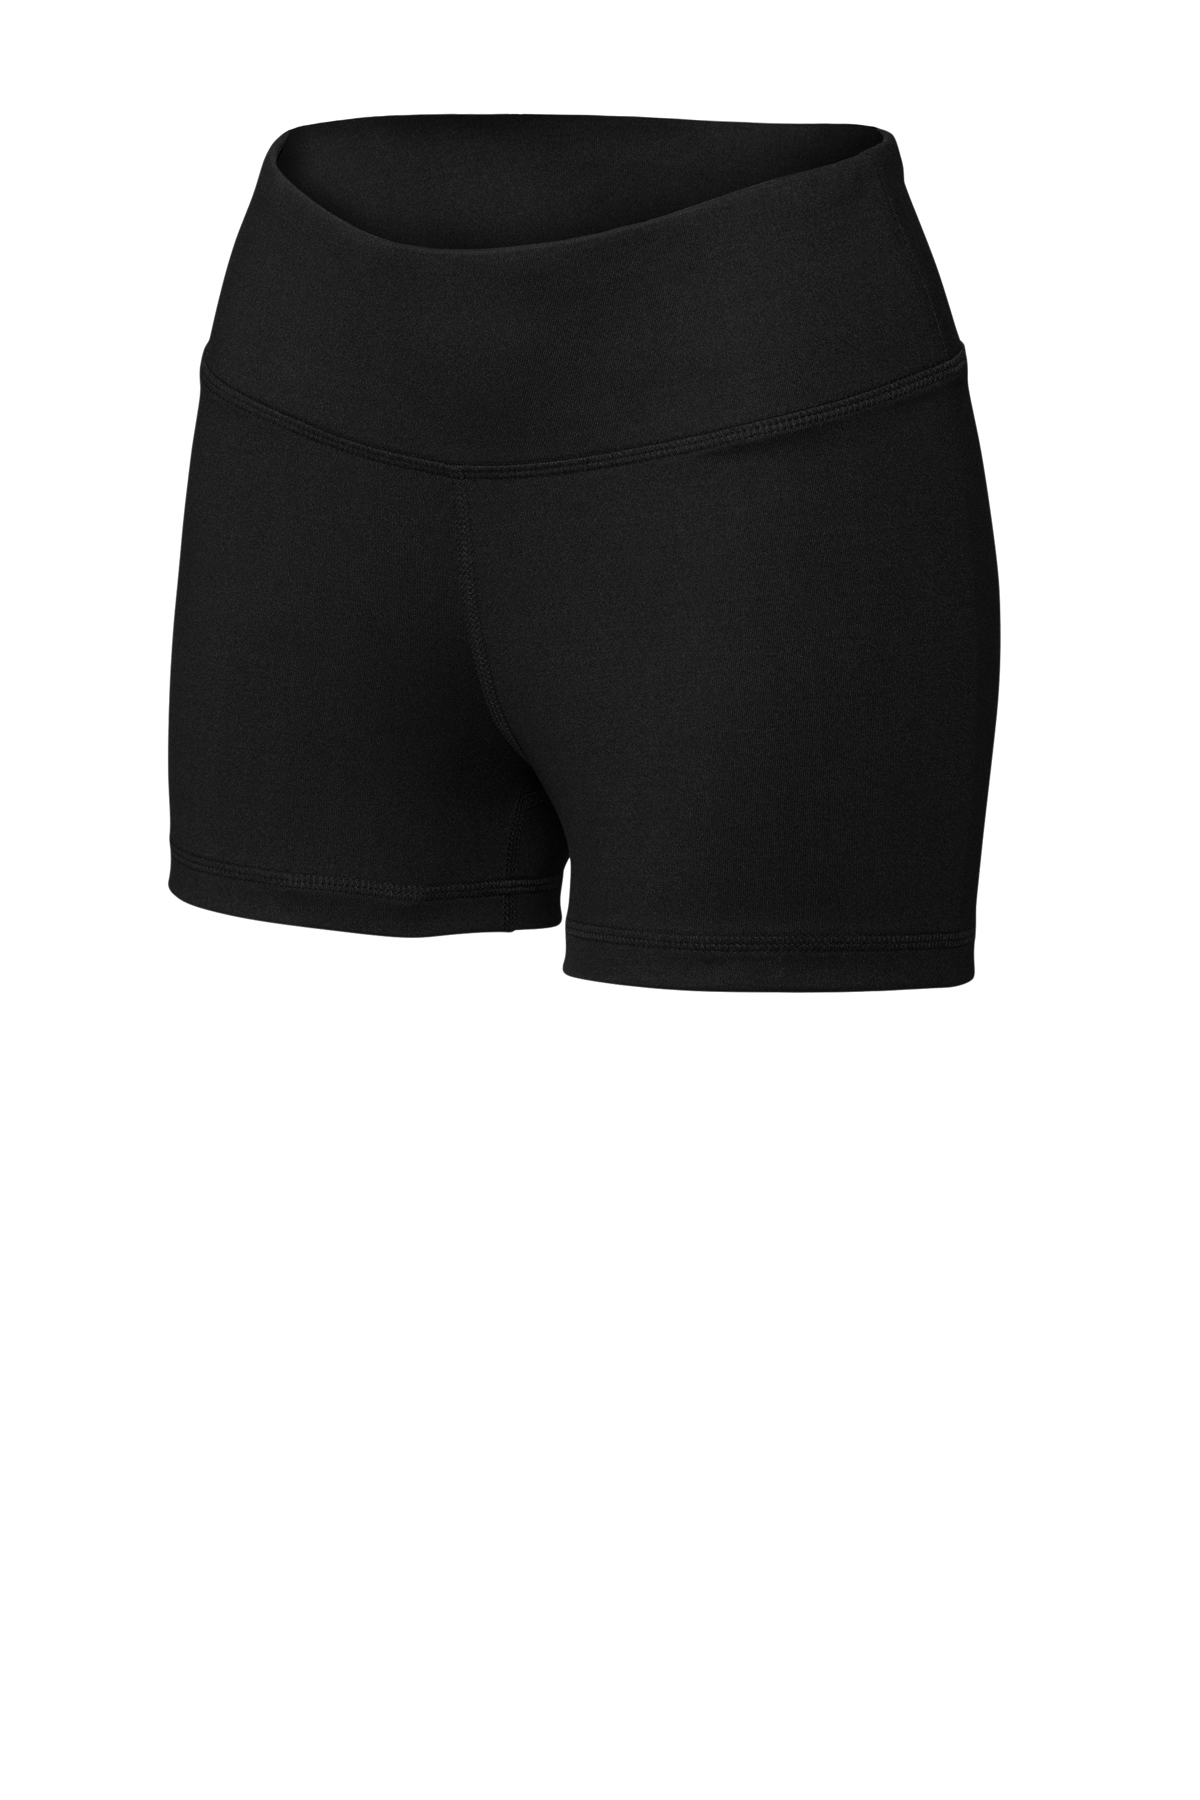 Redbat classics women's grey melange shorts offer at Sportscene